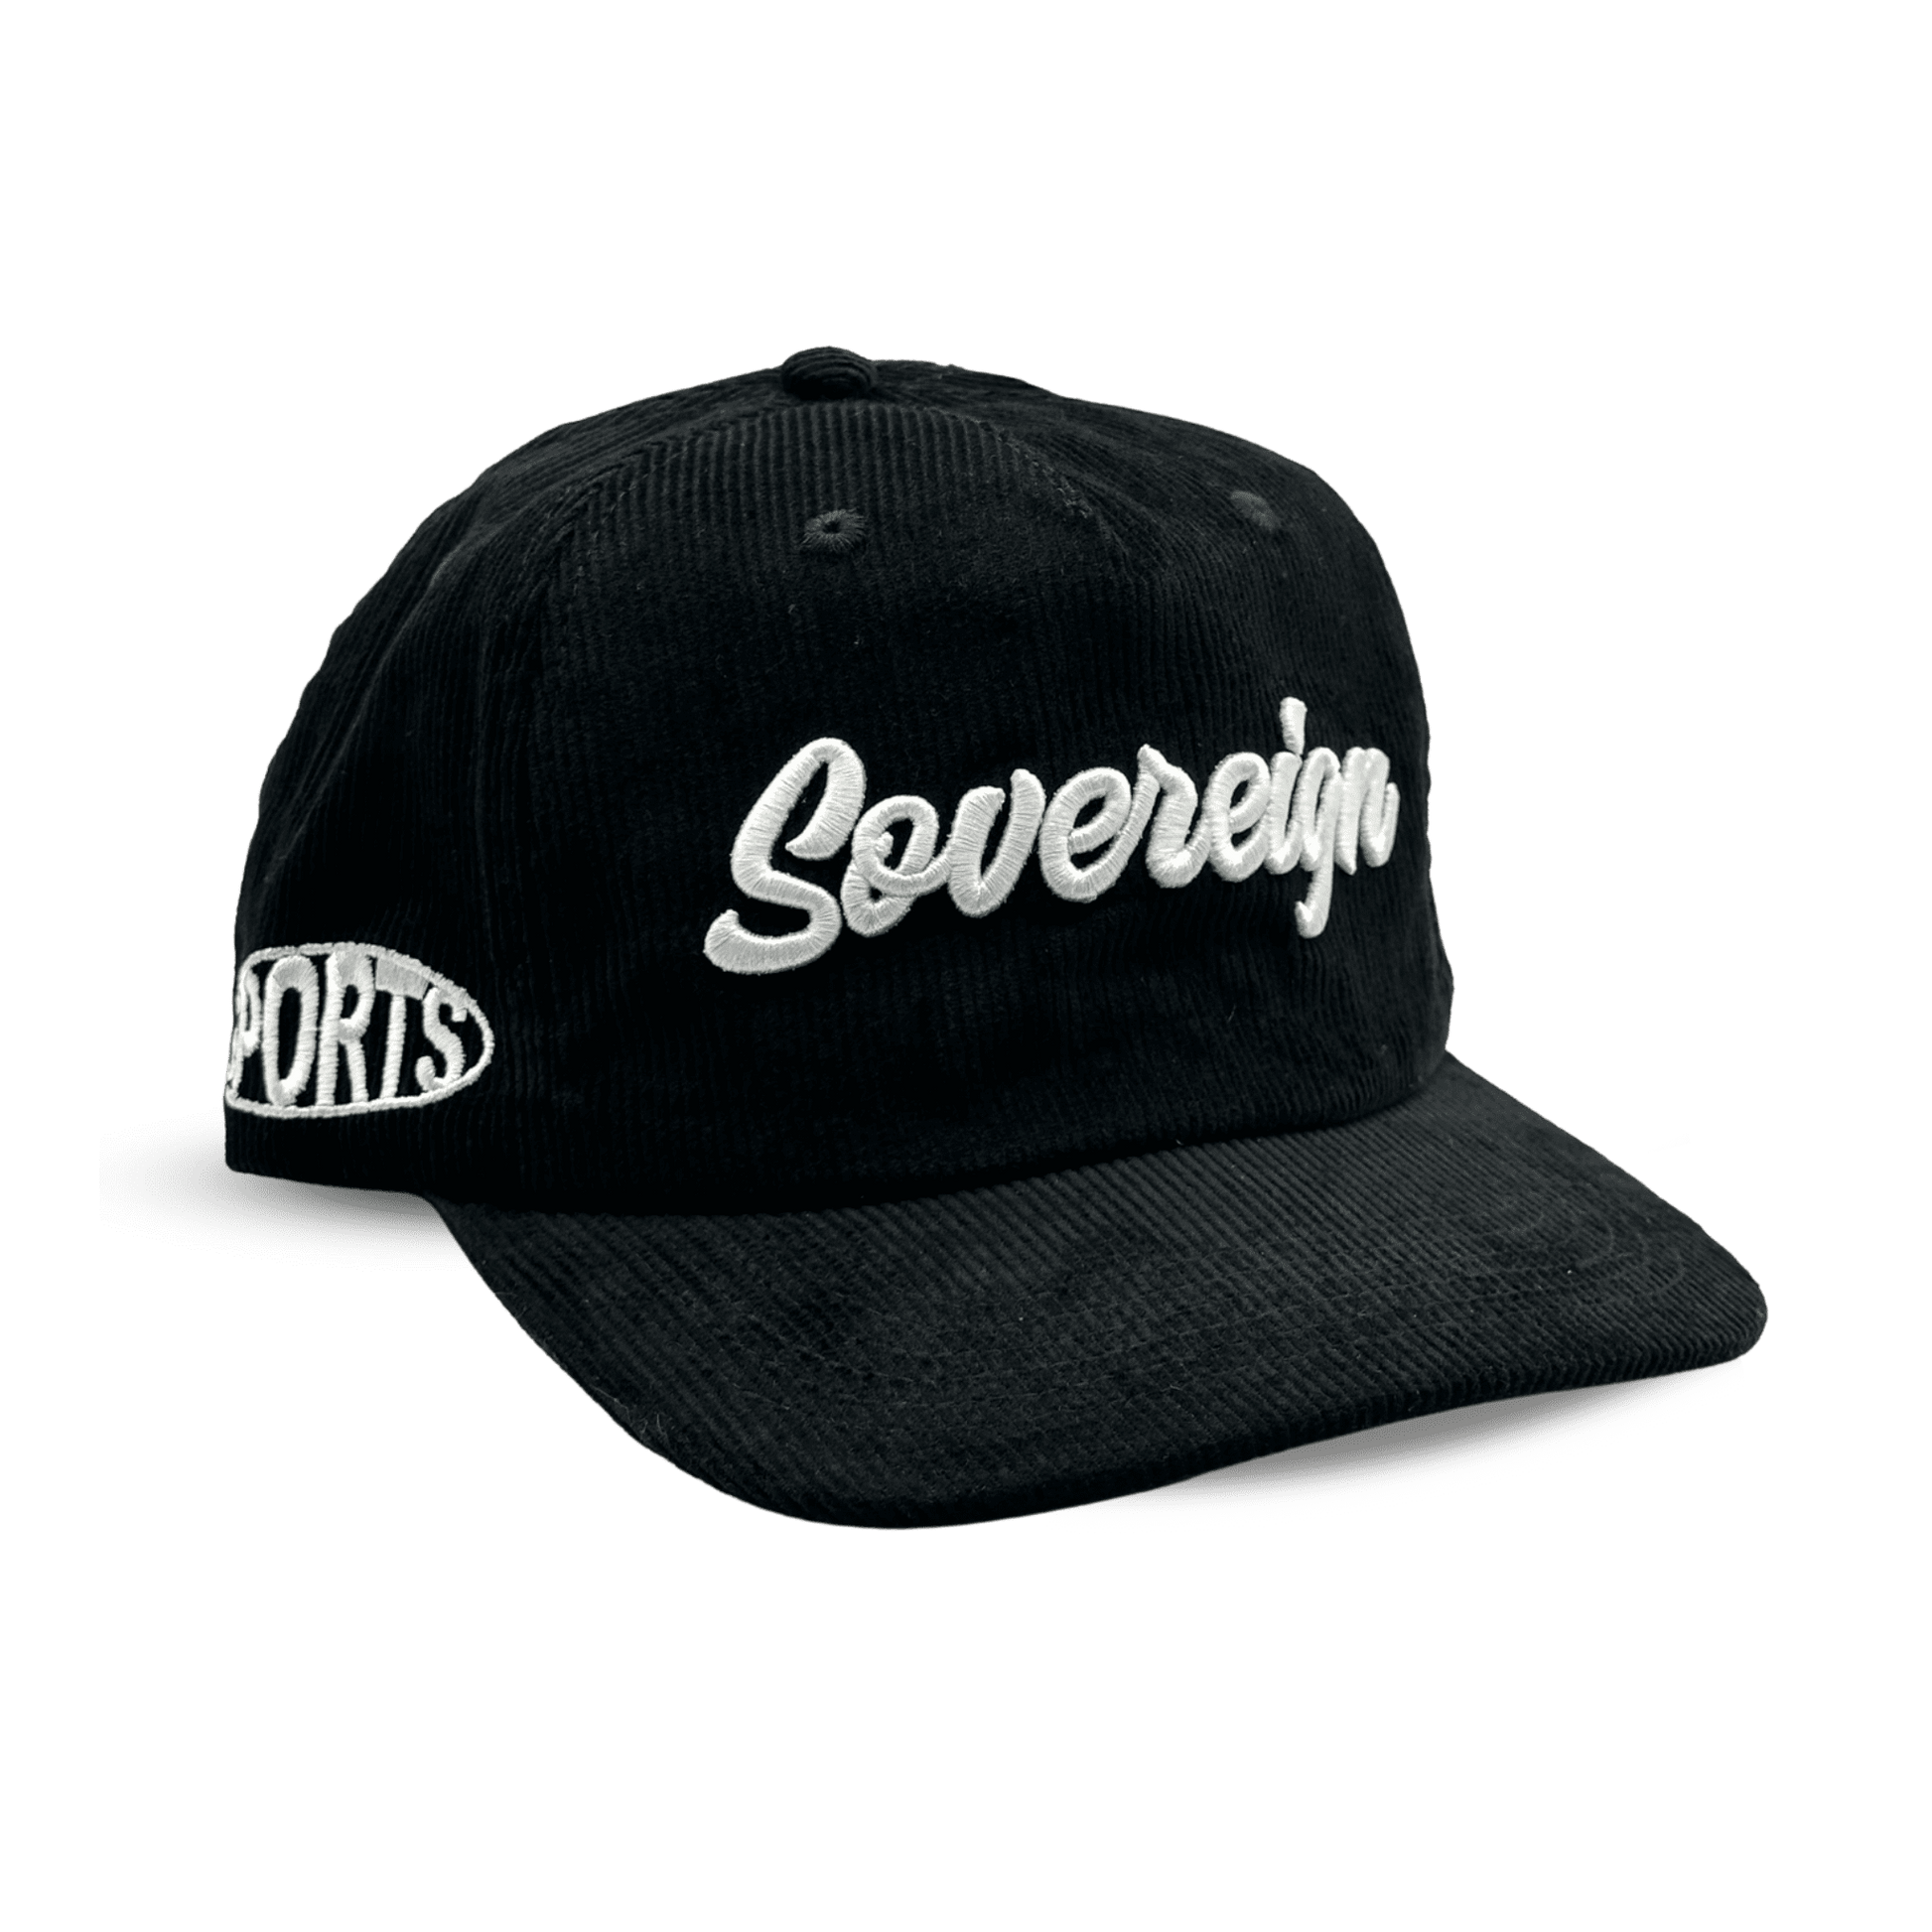 sovereign corduroy vintage hat black sport script, 5 panel retro